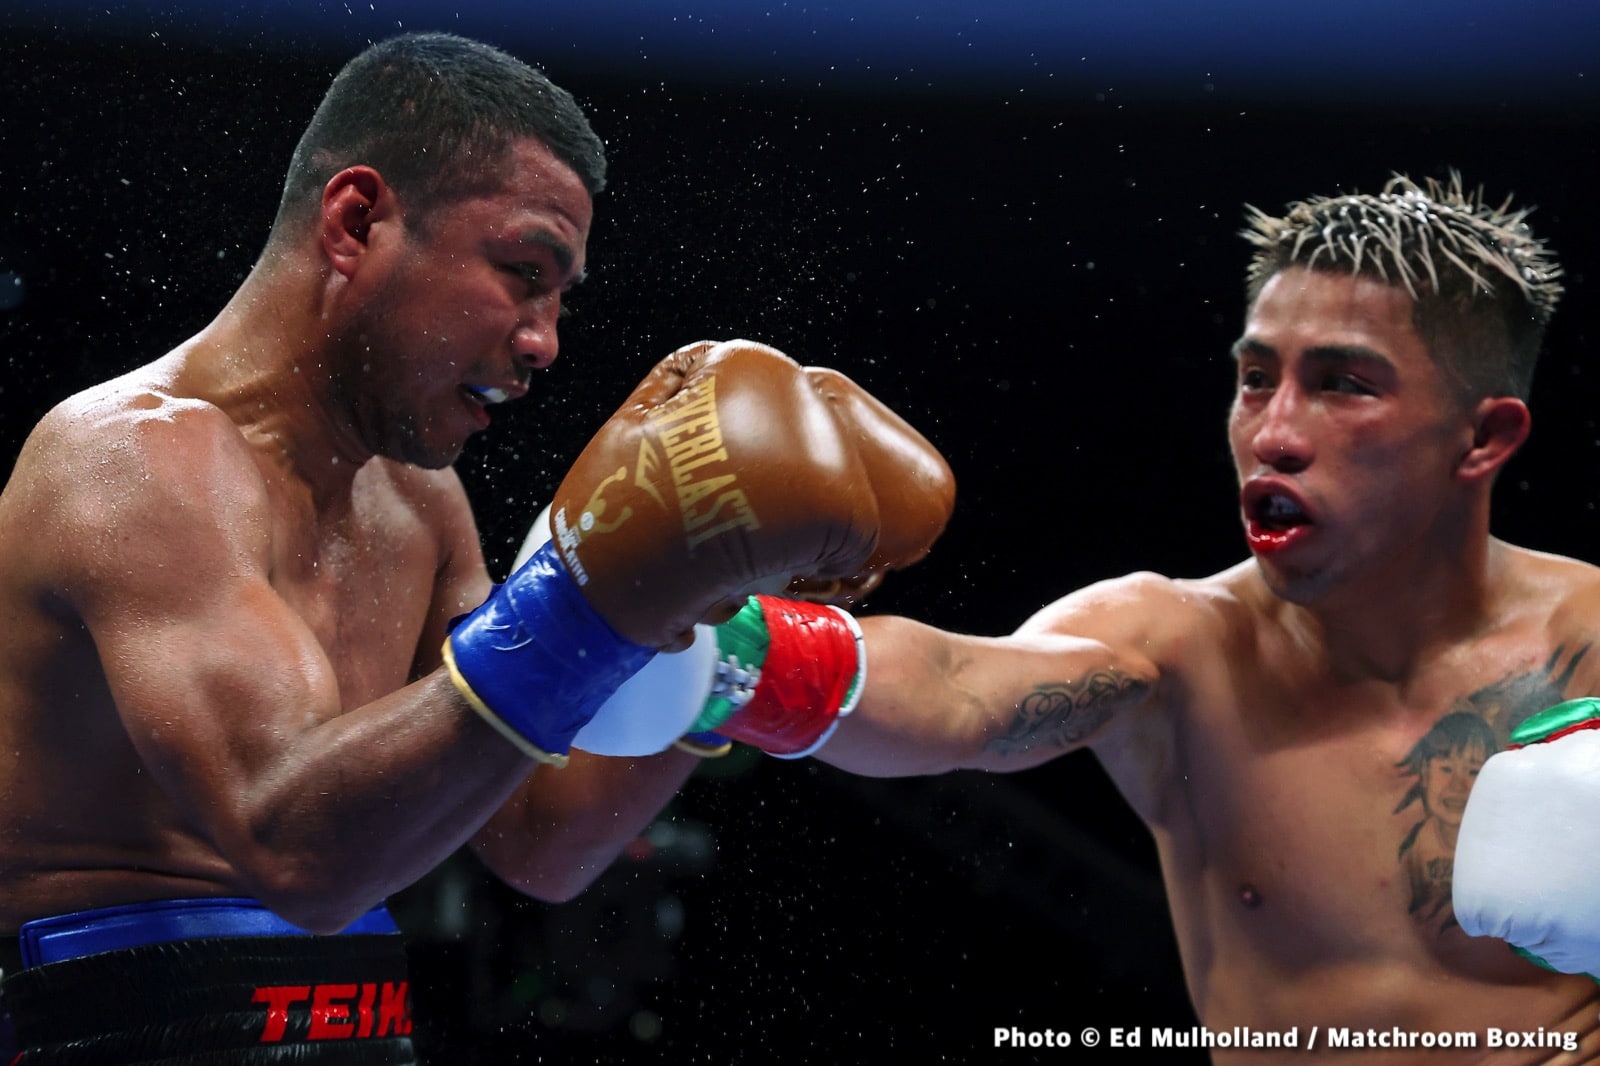 Emilio Sanchez boxing image / photo